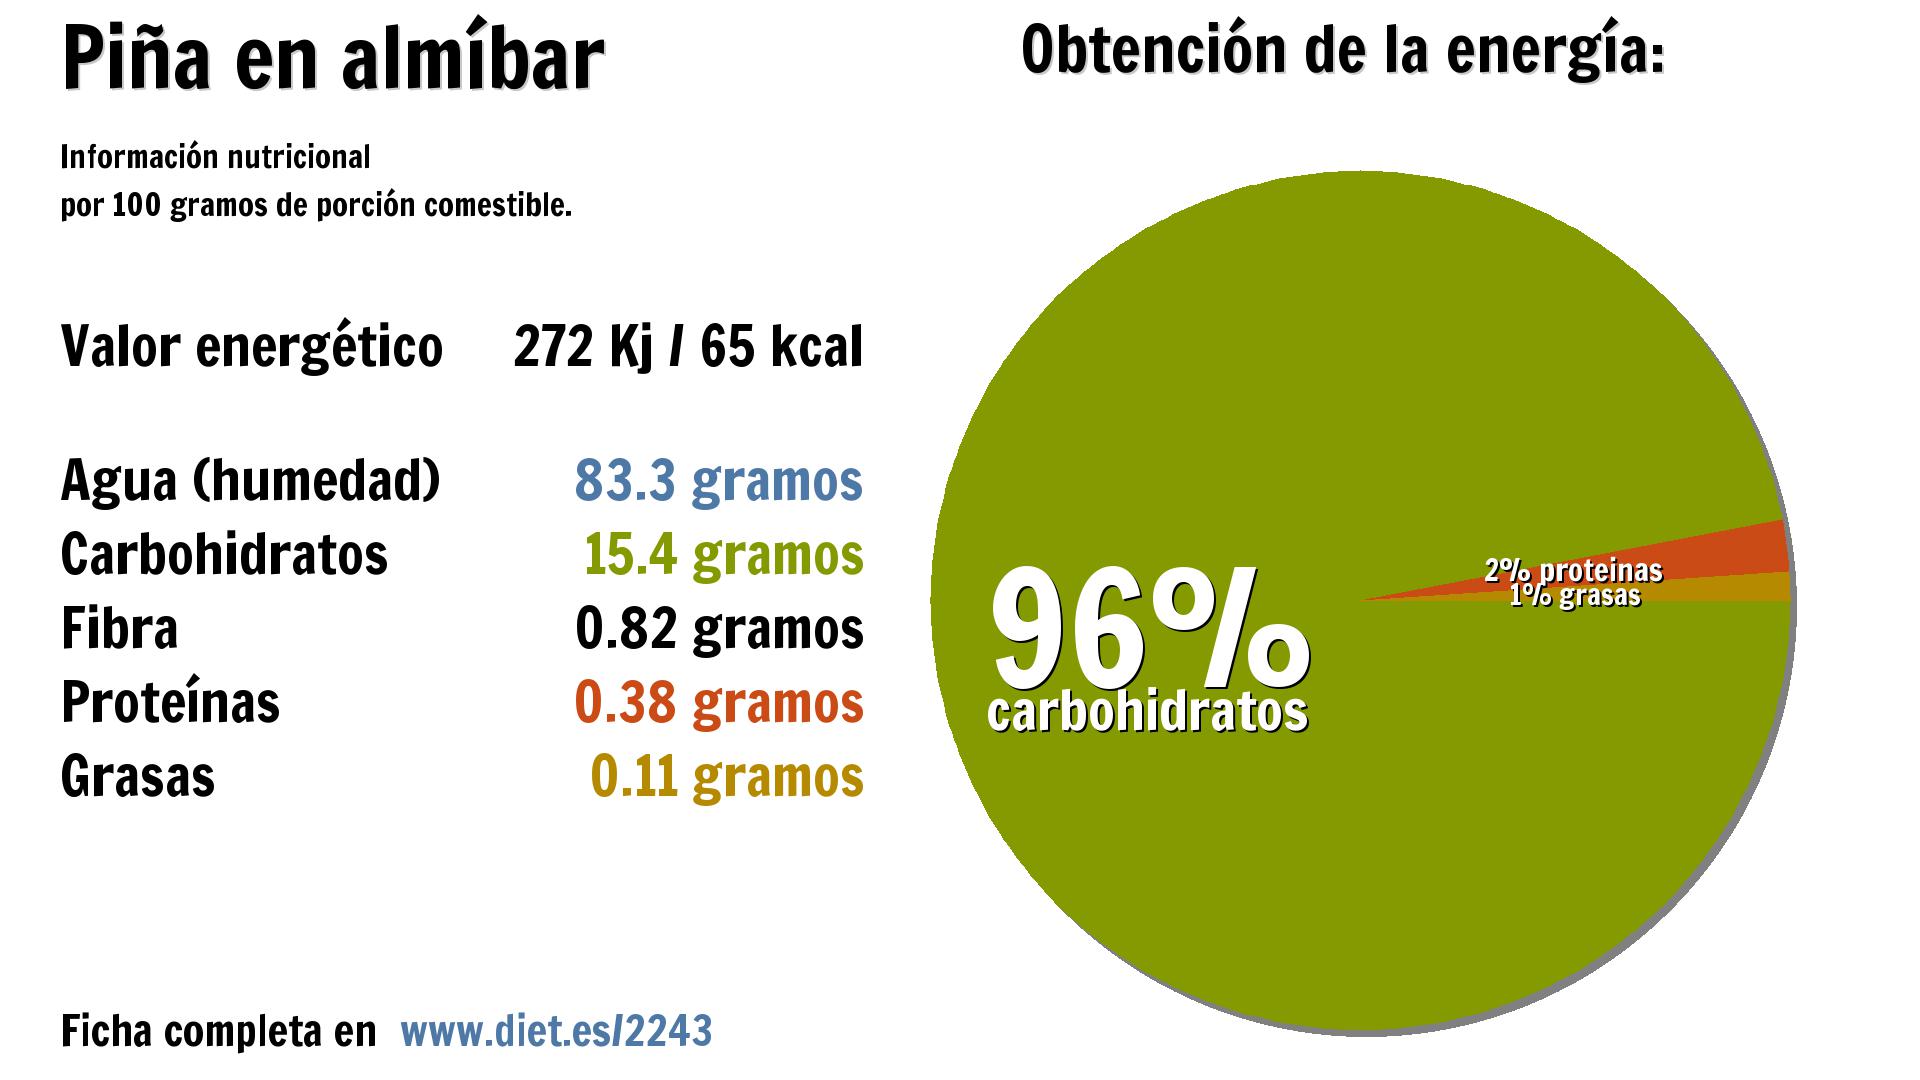 Piña en almíbar: energía 272 Kj, agua 83 g., carbohidratos 15 g. y fibra 1 g.